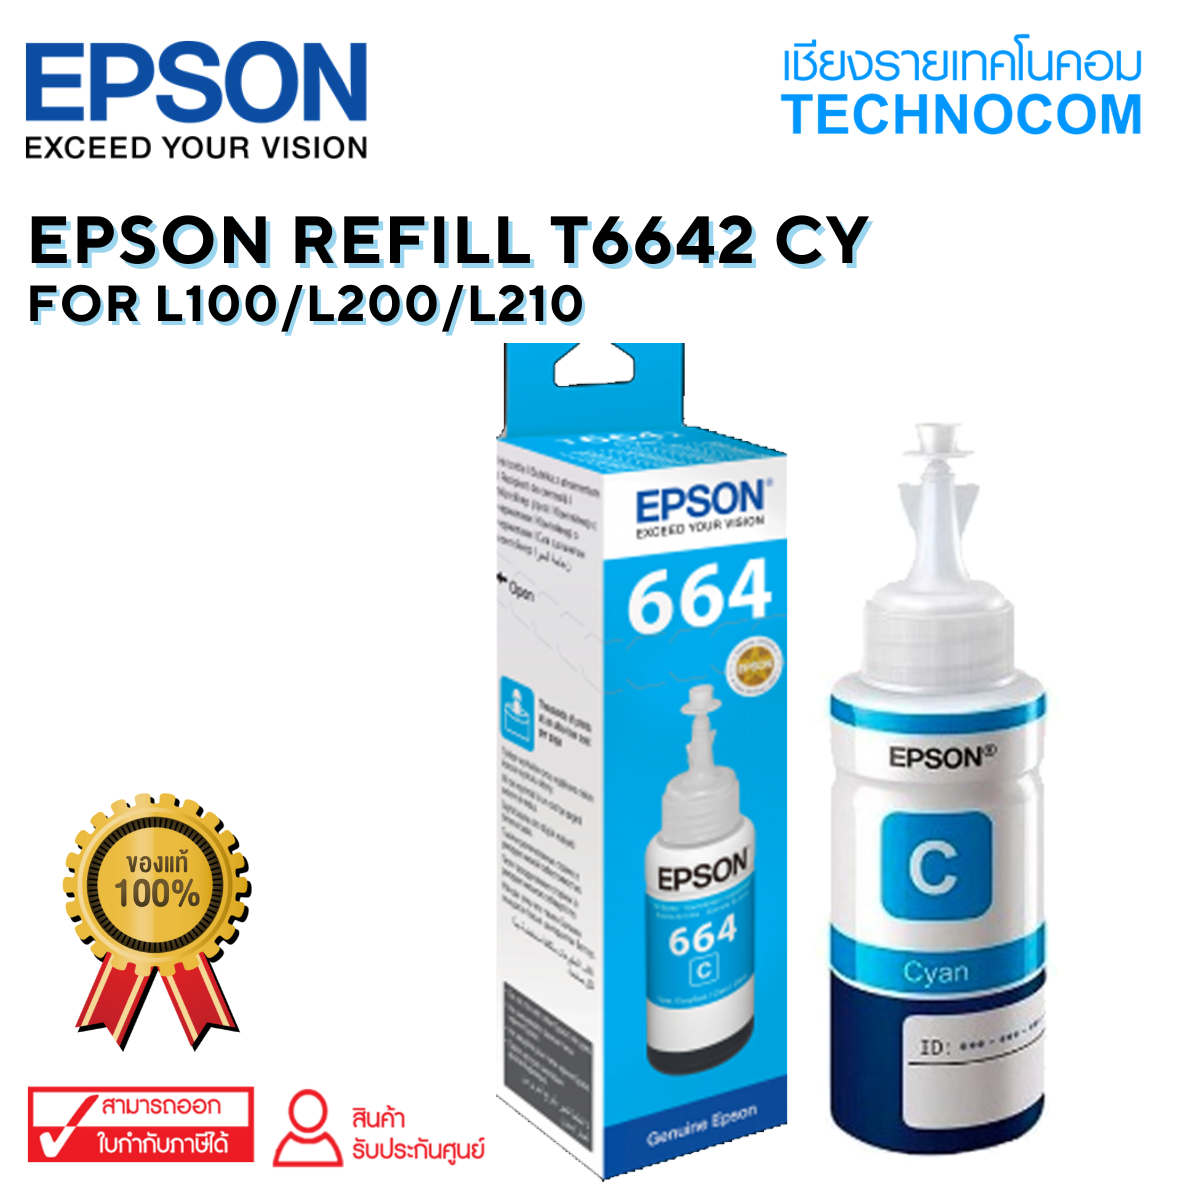 EPSON REFILL T6642 CY For L100/L200/L210